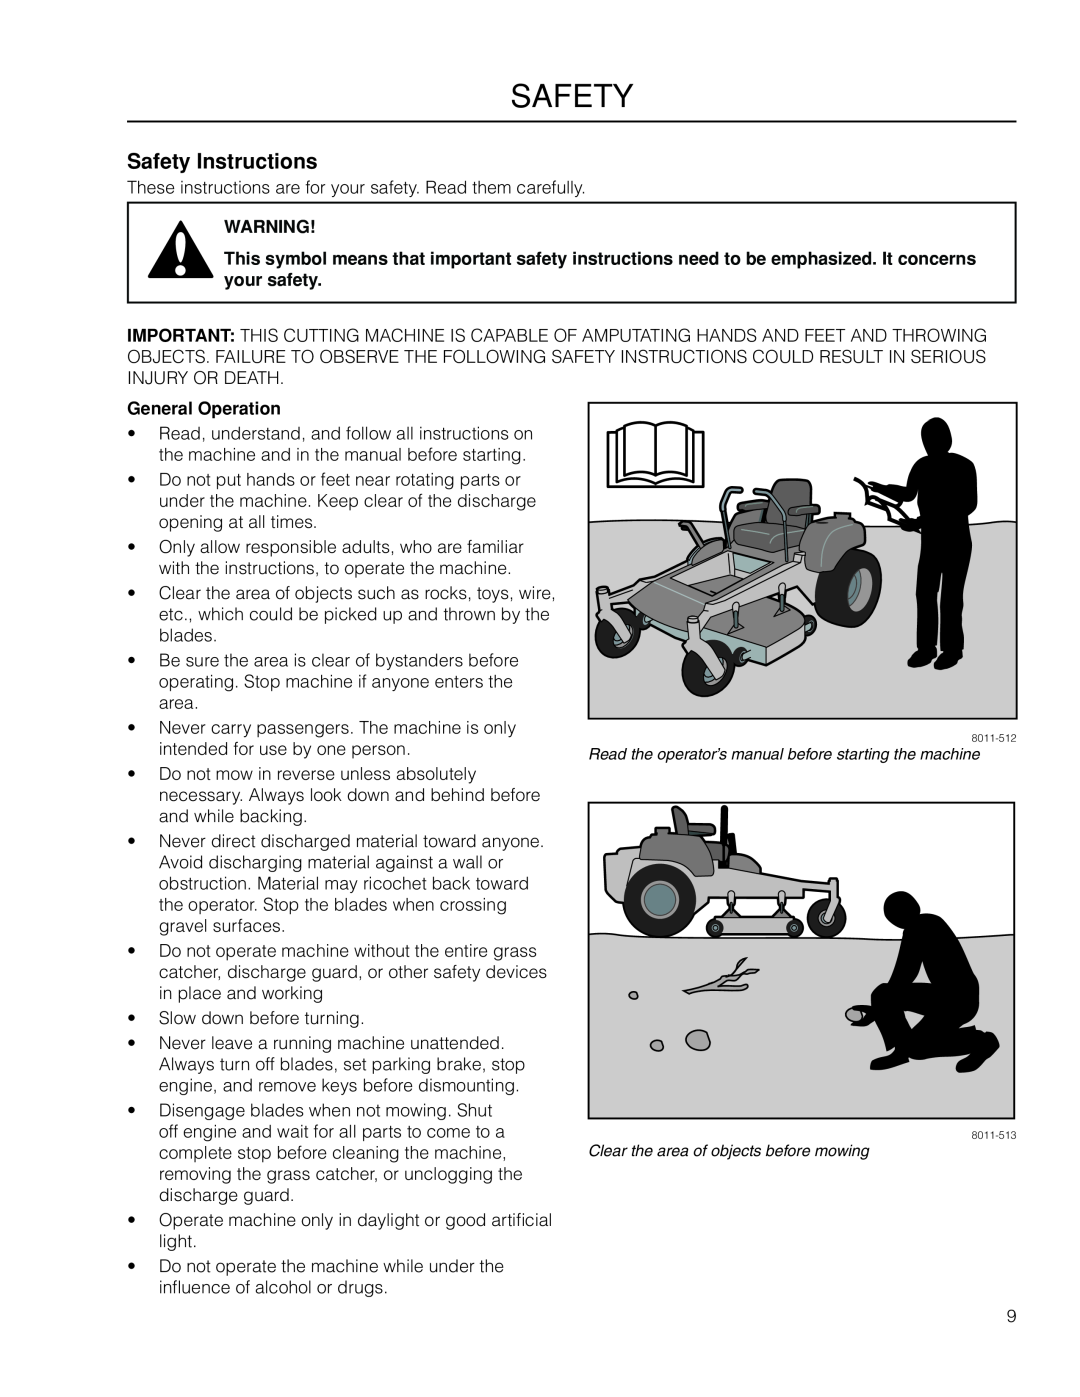 Dixon 966503601, SZ4619 CA manual Safety Instructions, General Operation 